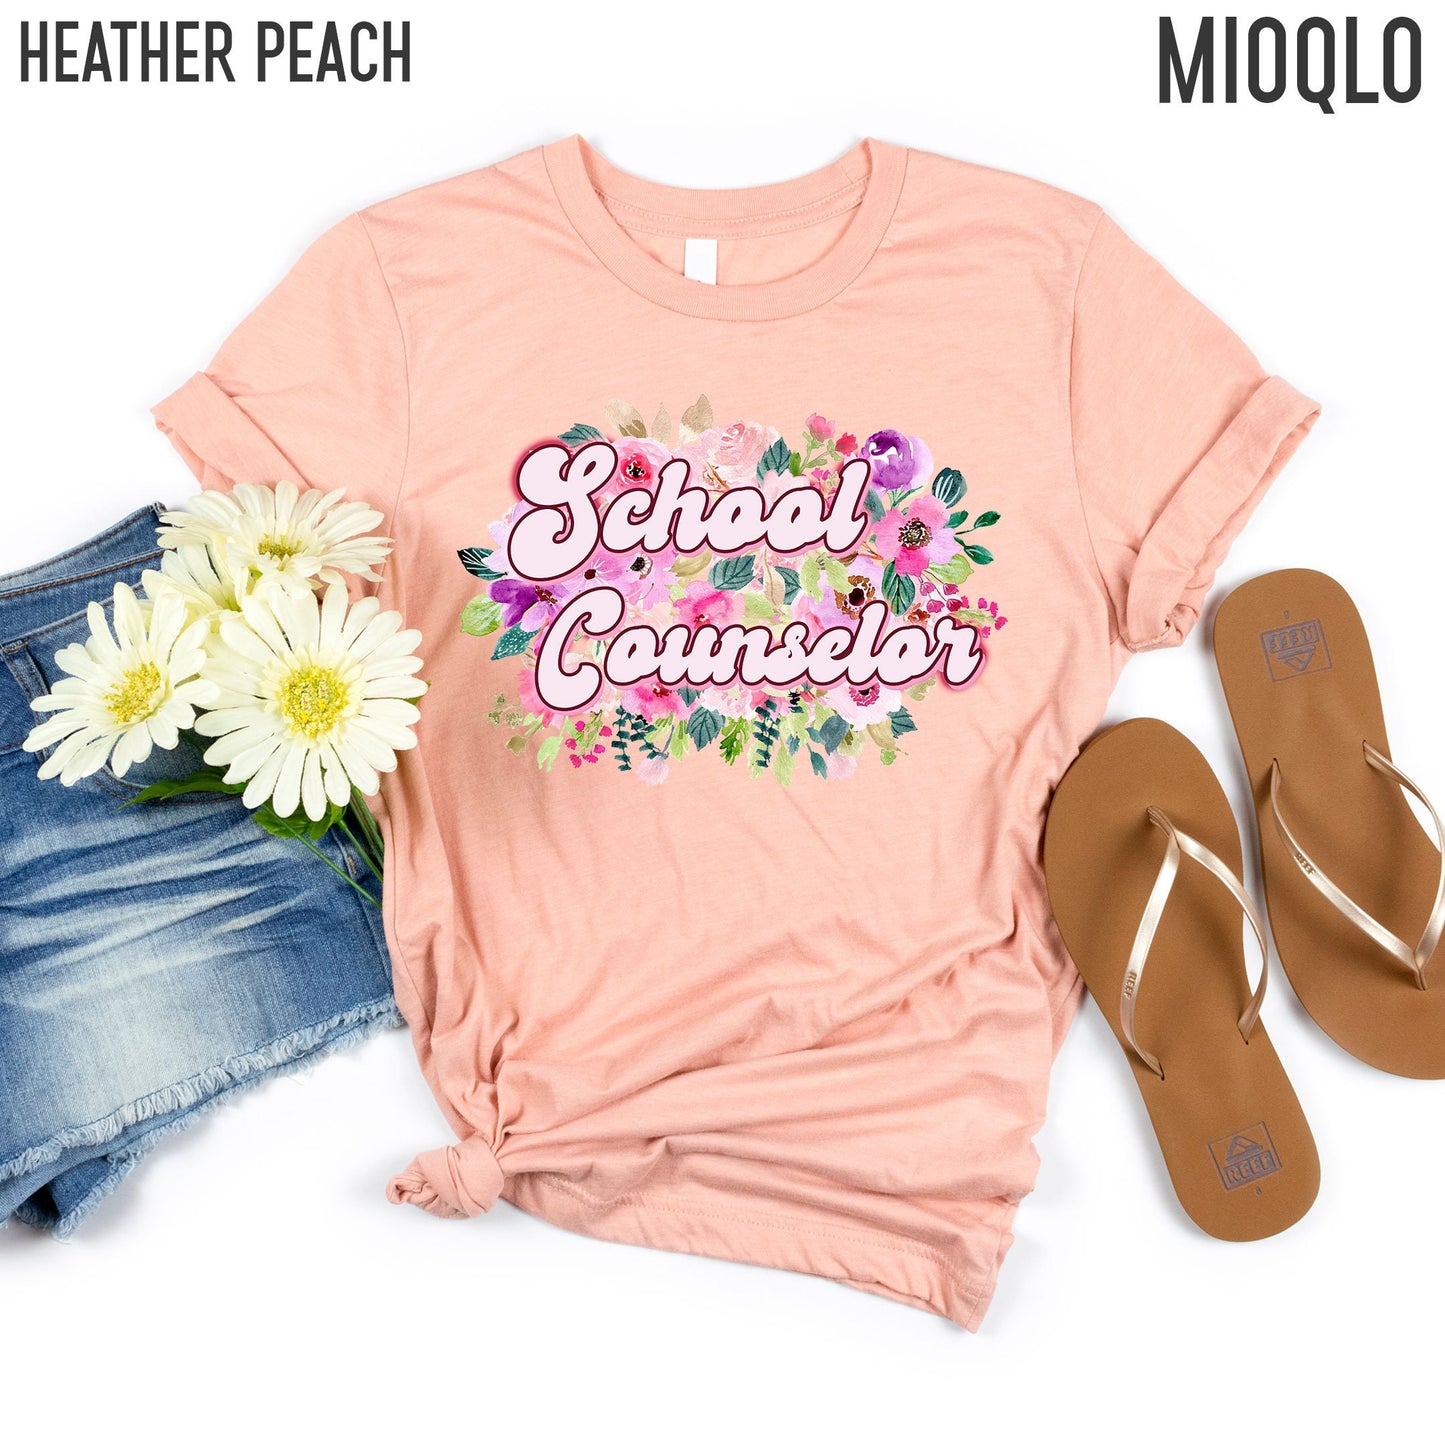 School Counselor Shirt, Counselor Sweatshirt, Counselor Flower Floral, Counseling Office, School Counselor Sweater Gift, Counselor Lady Tee